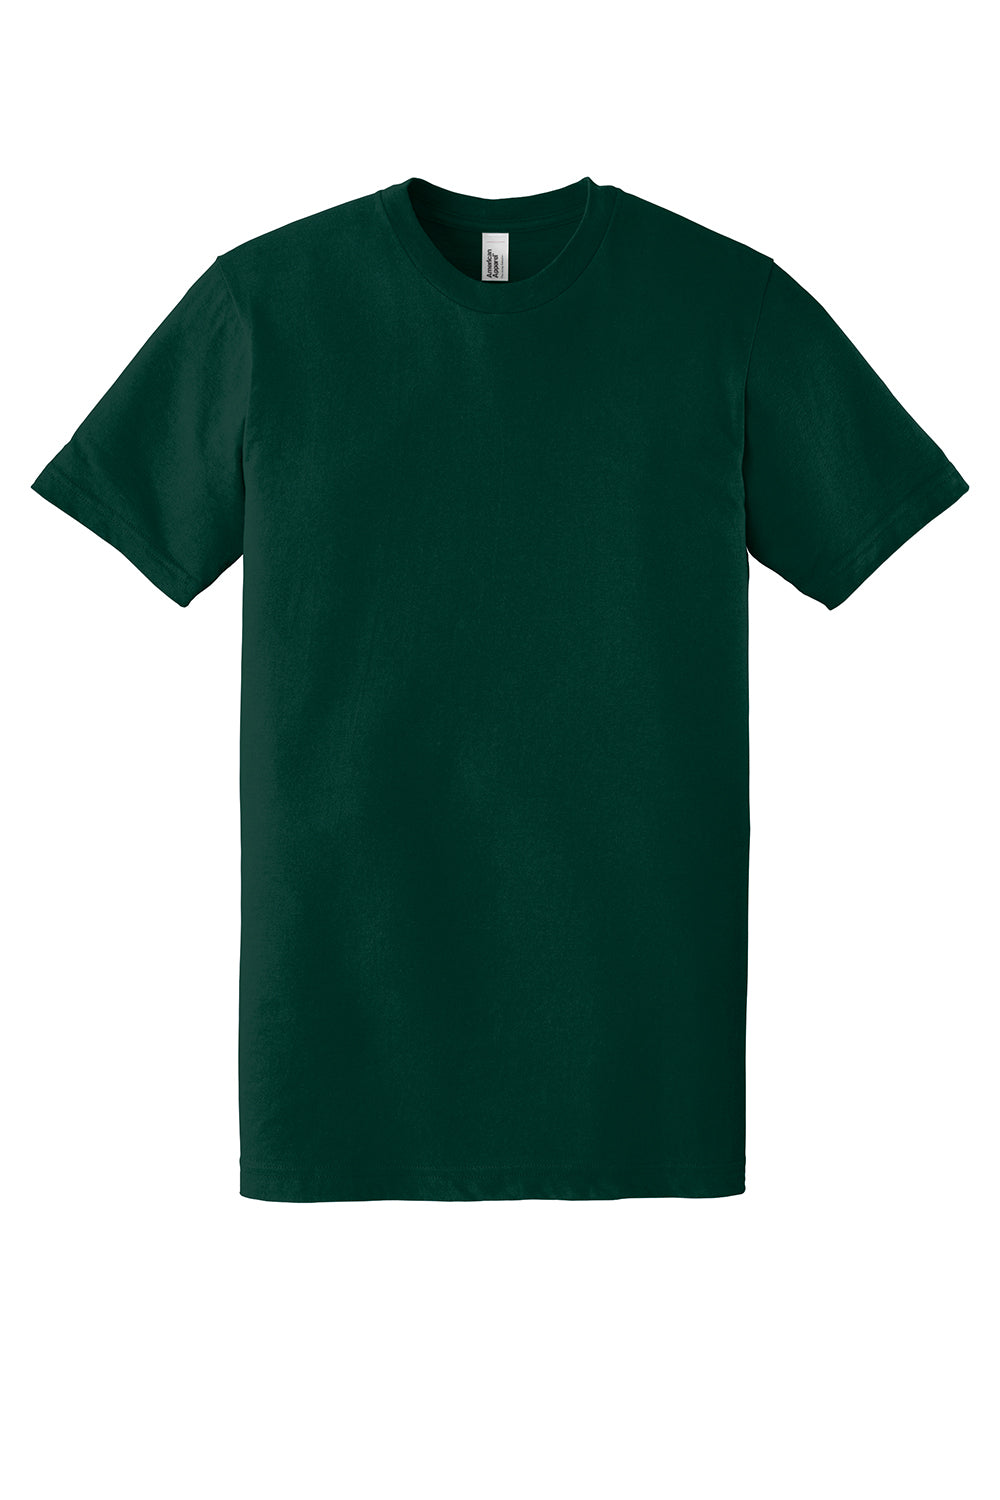 American Apparel 2001 Mens Fine Jersey Short Sleeve Crewneck T-Shirt Forest Green Flat Front